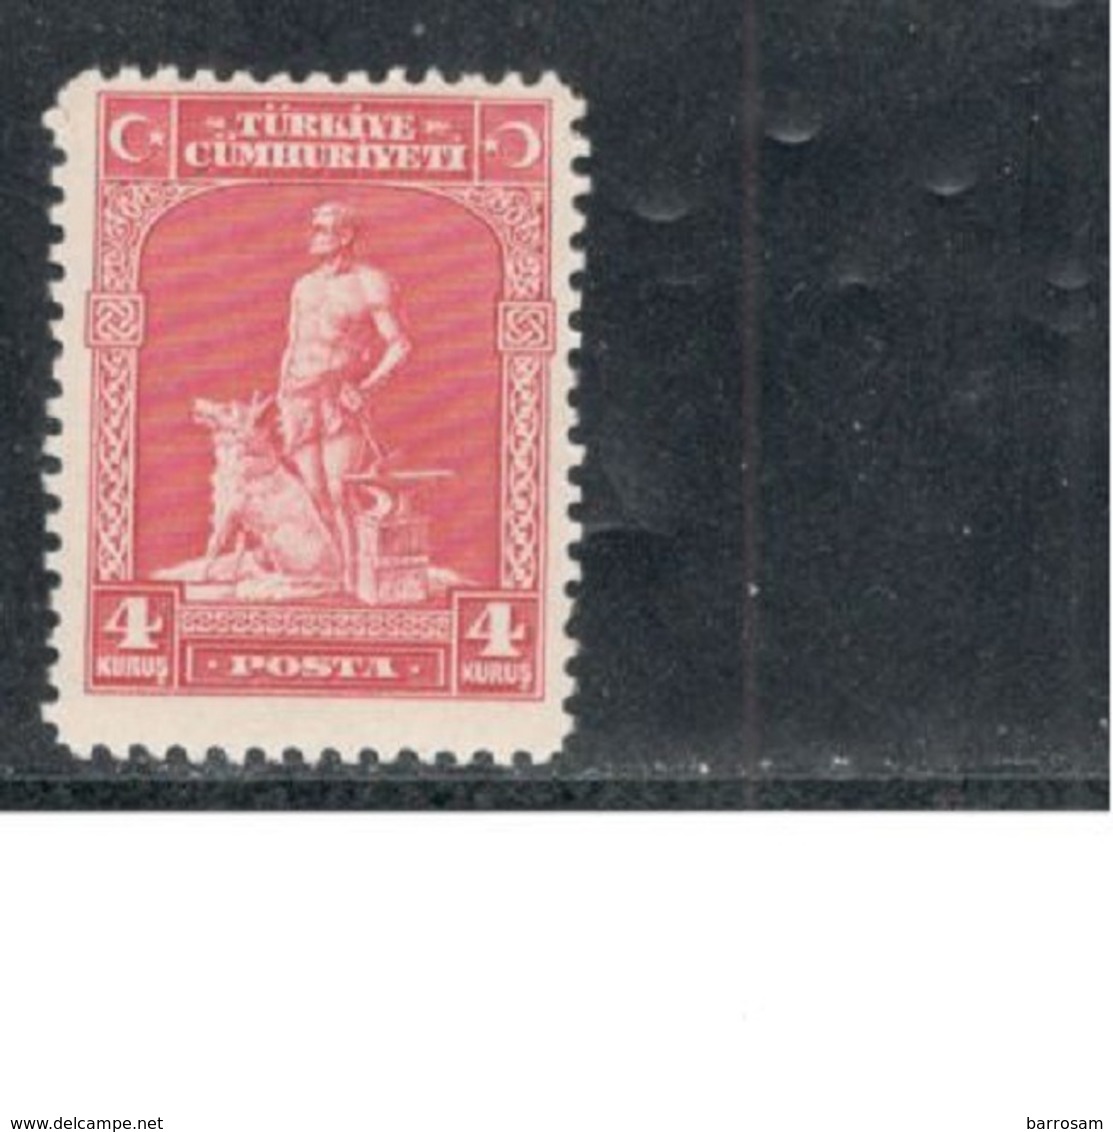 TURKEY1930: Michel 898 Mnh** Cat.Value$55 - Unused Stamps